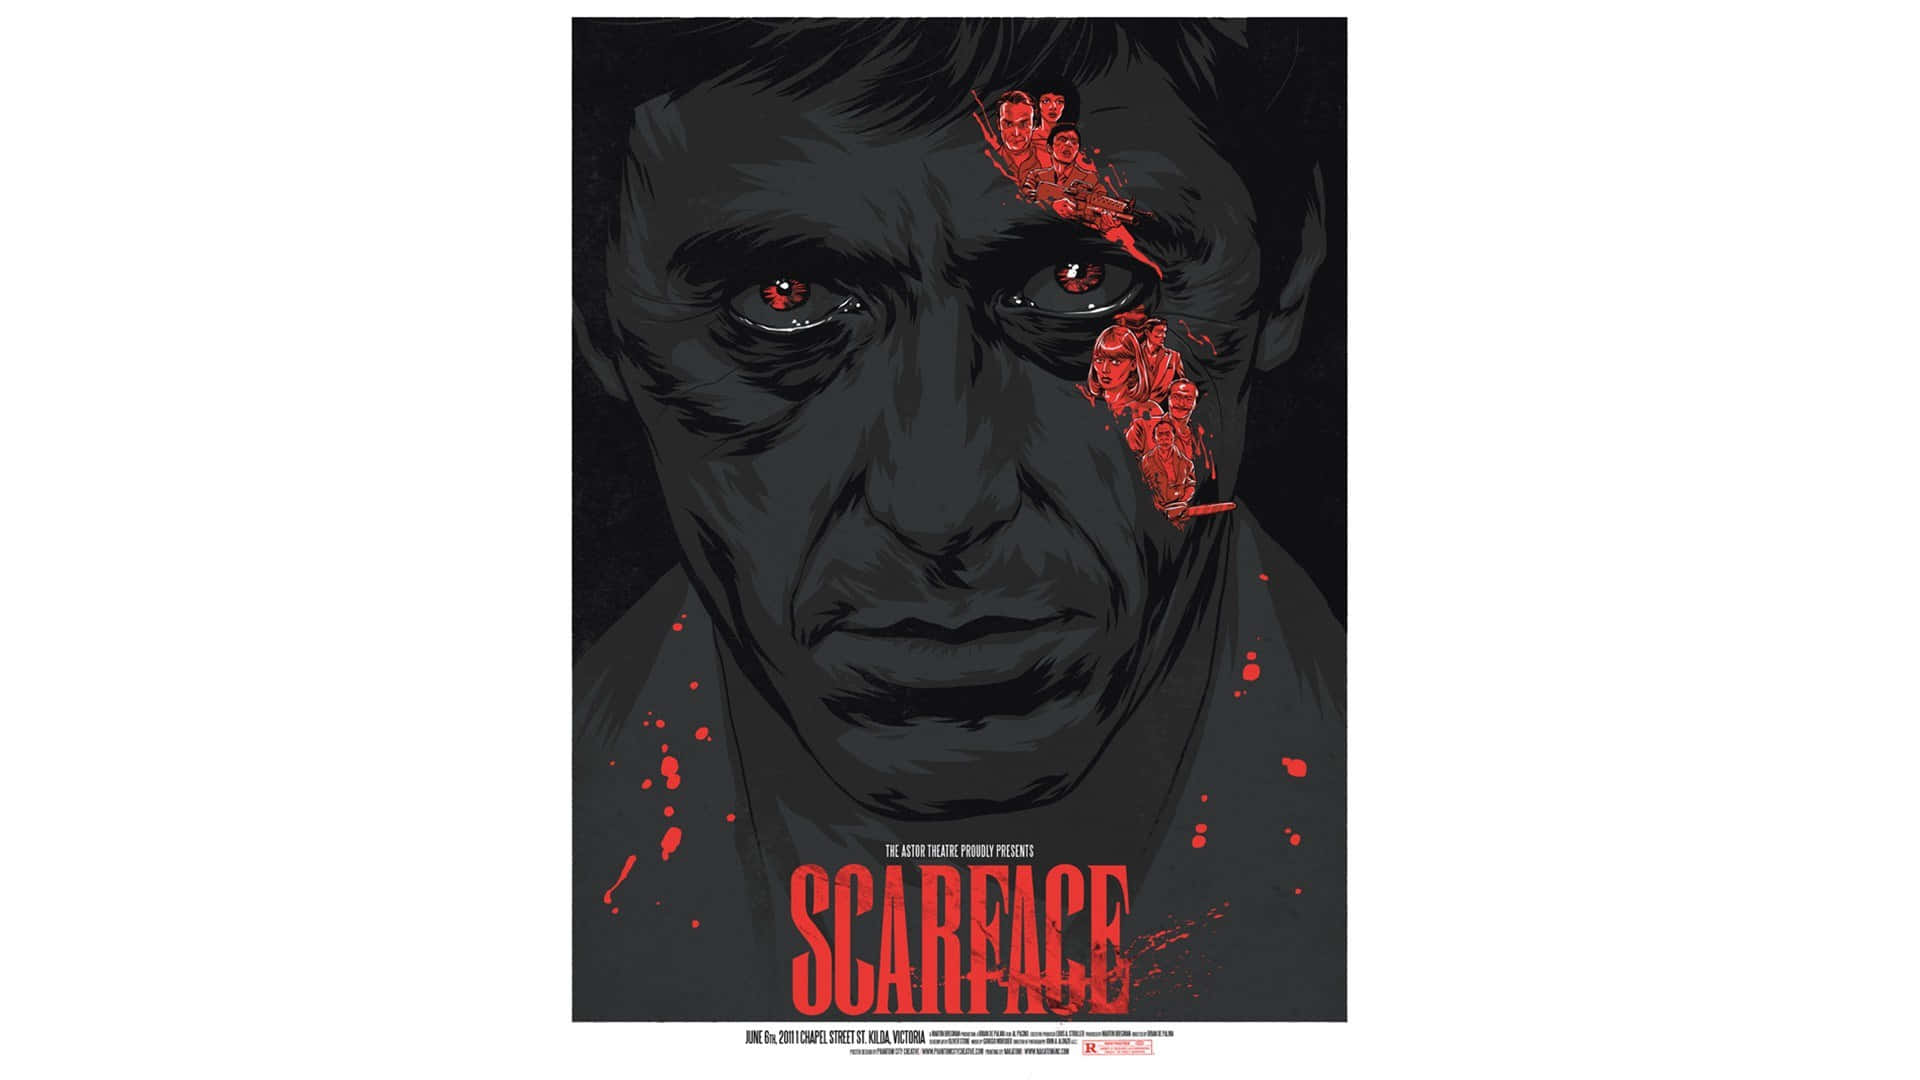 Scarface1920 X 1080 Baggrund.